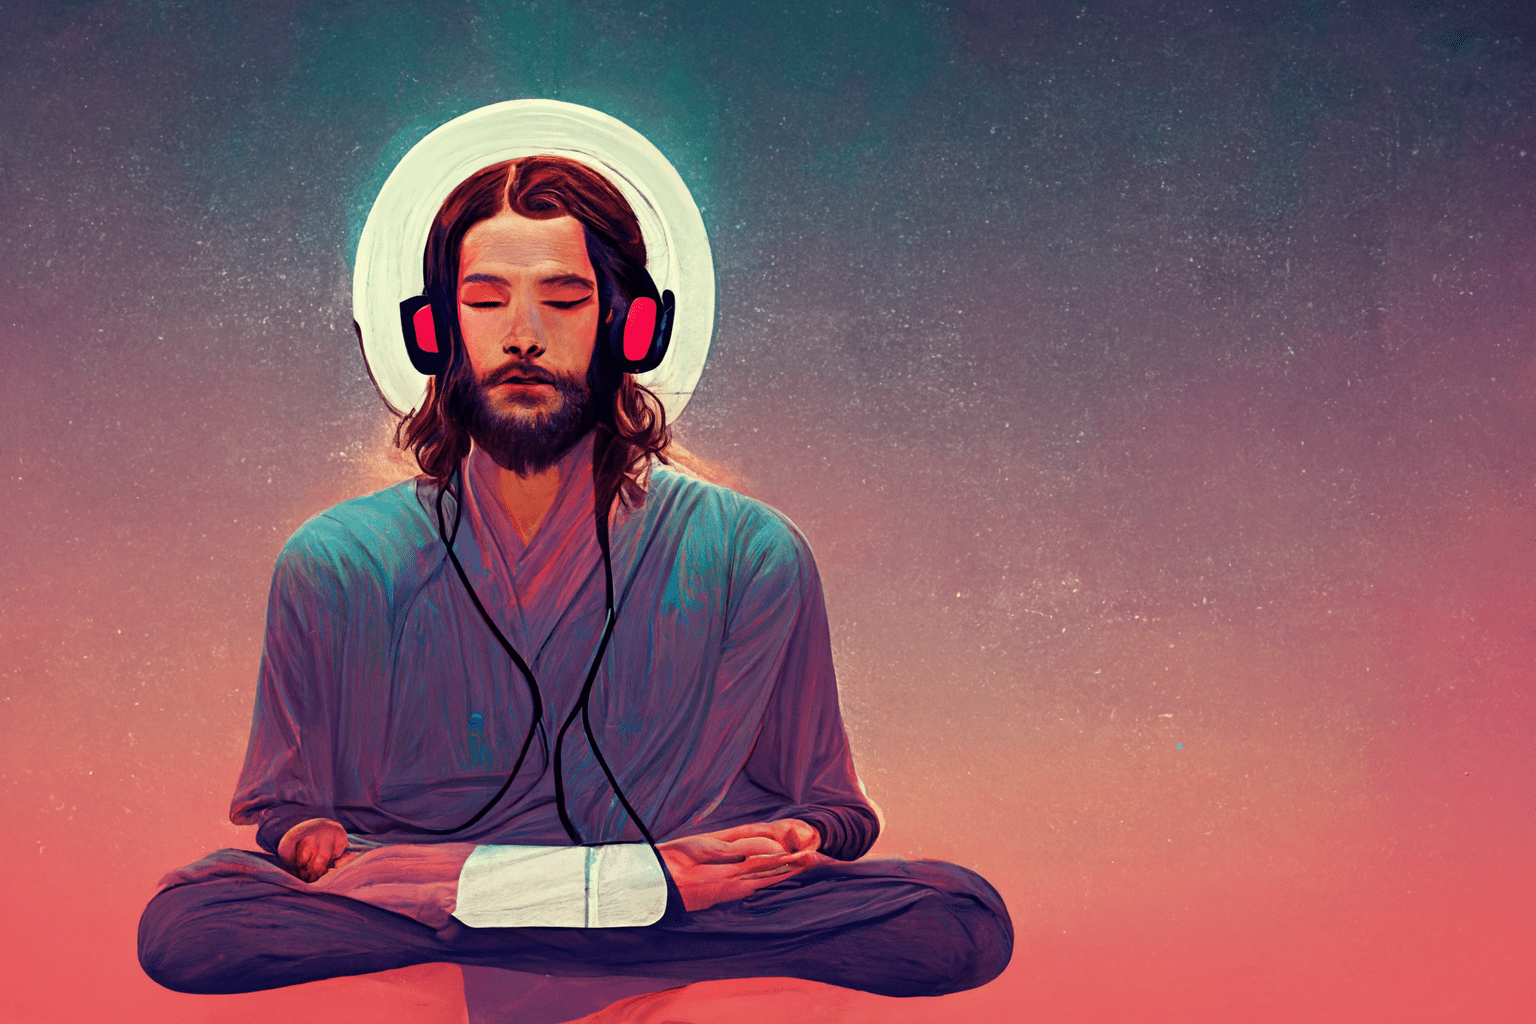 Jesus listening to Music 